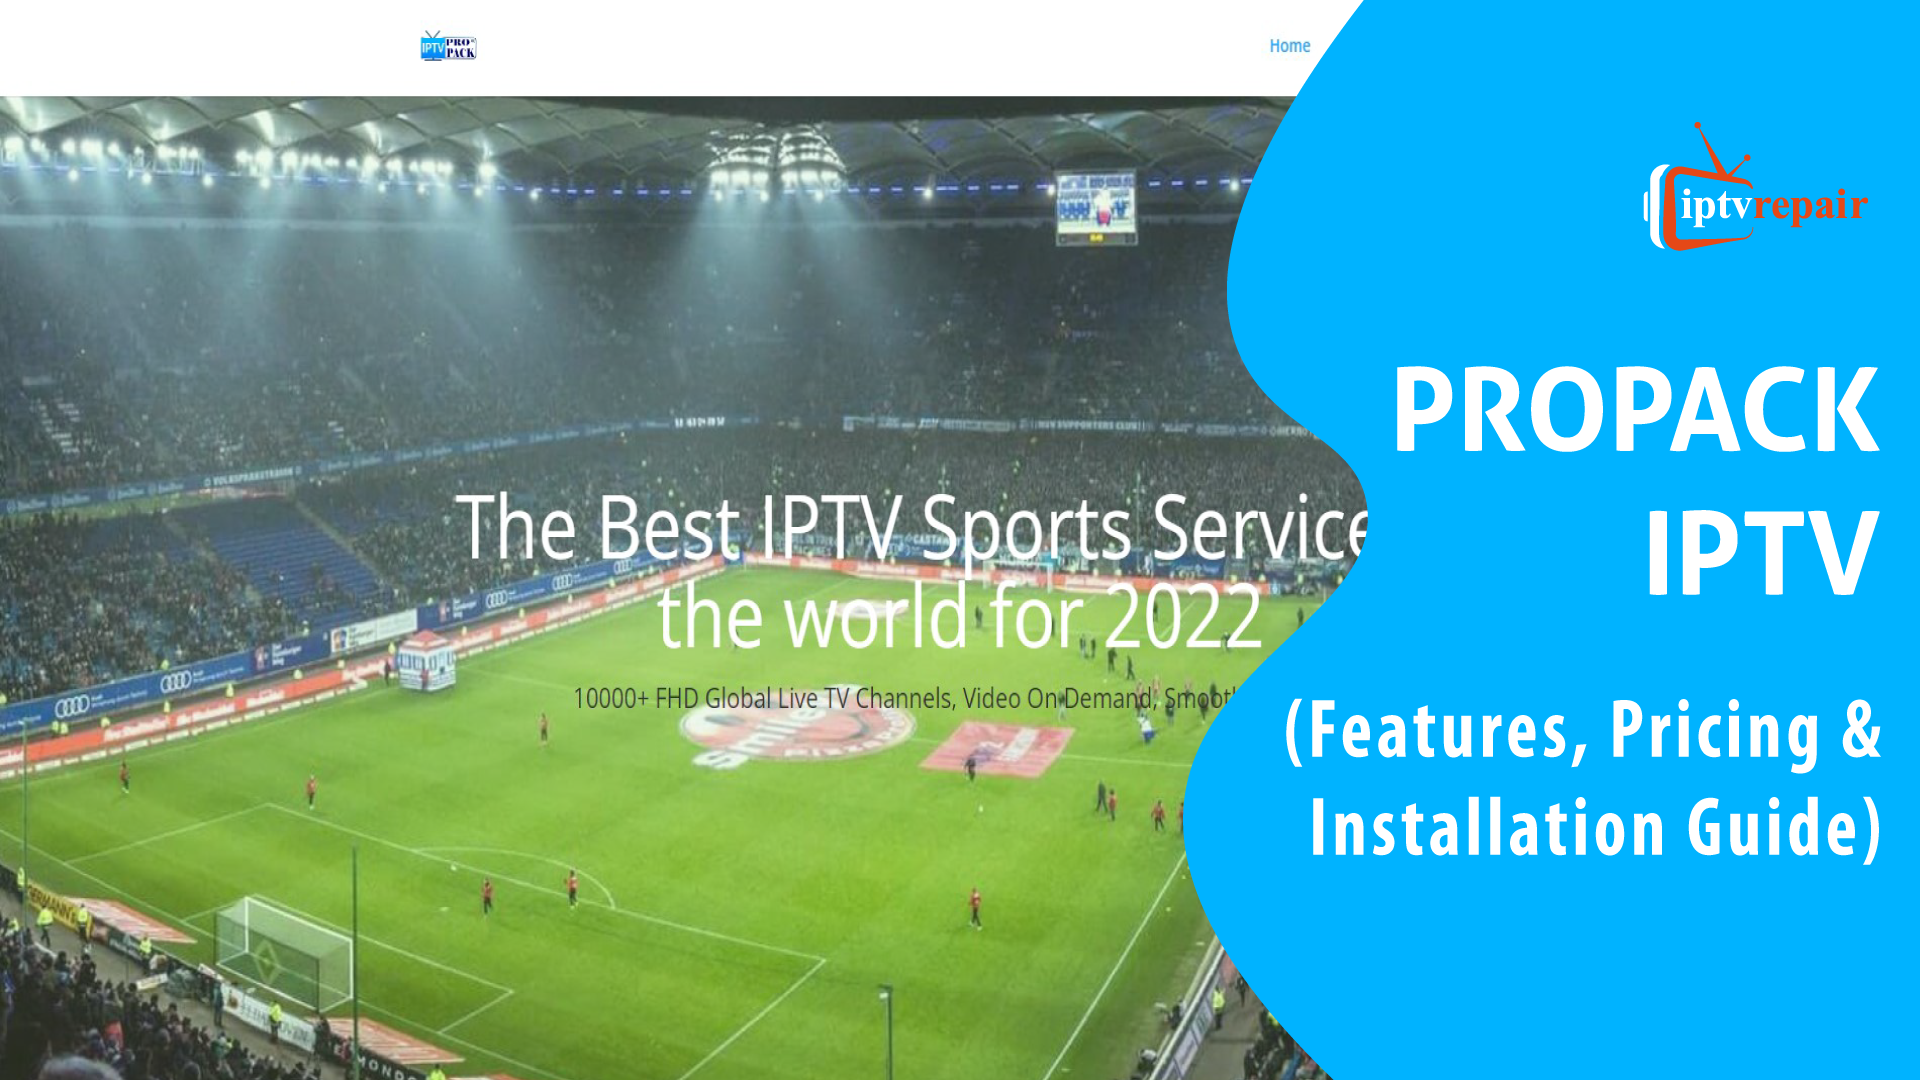 Propack IPTV Service Provider